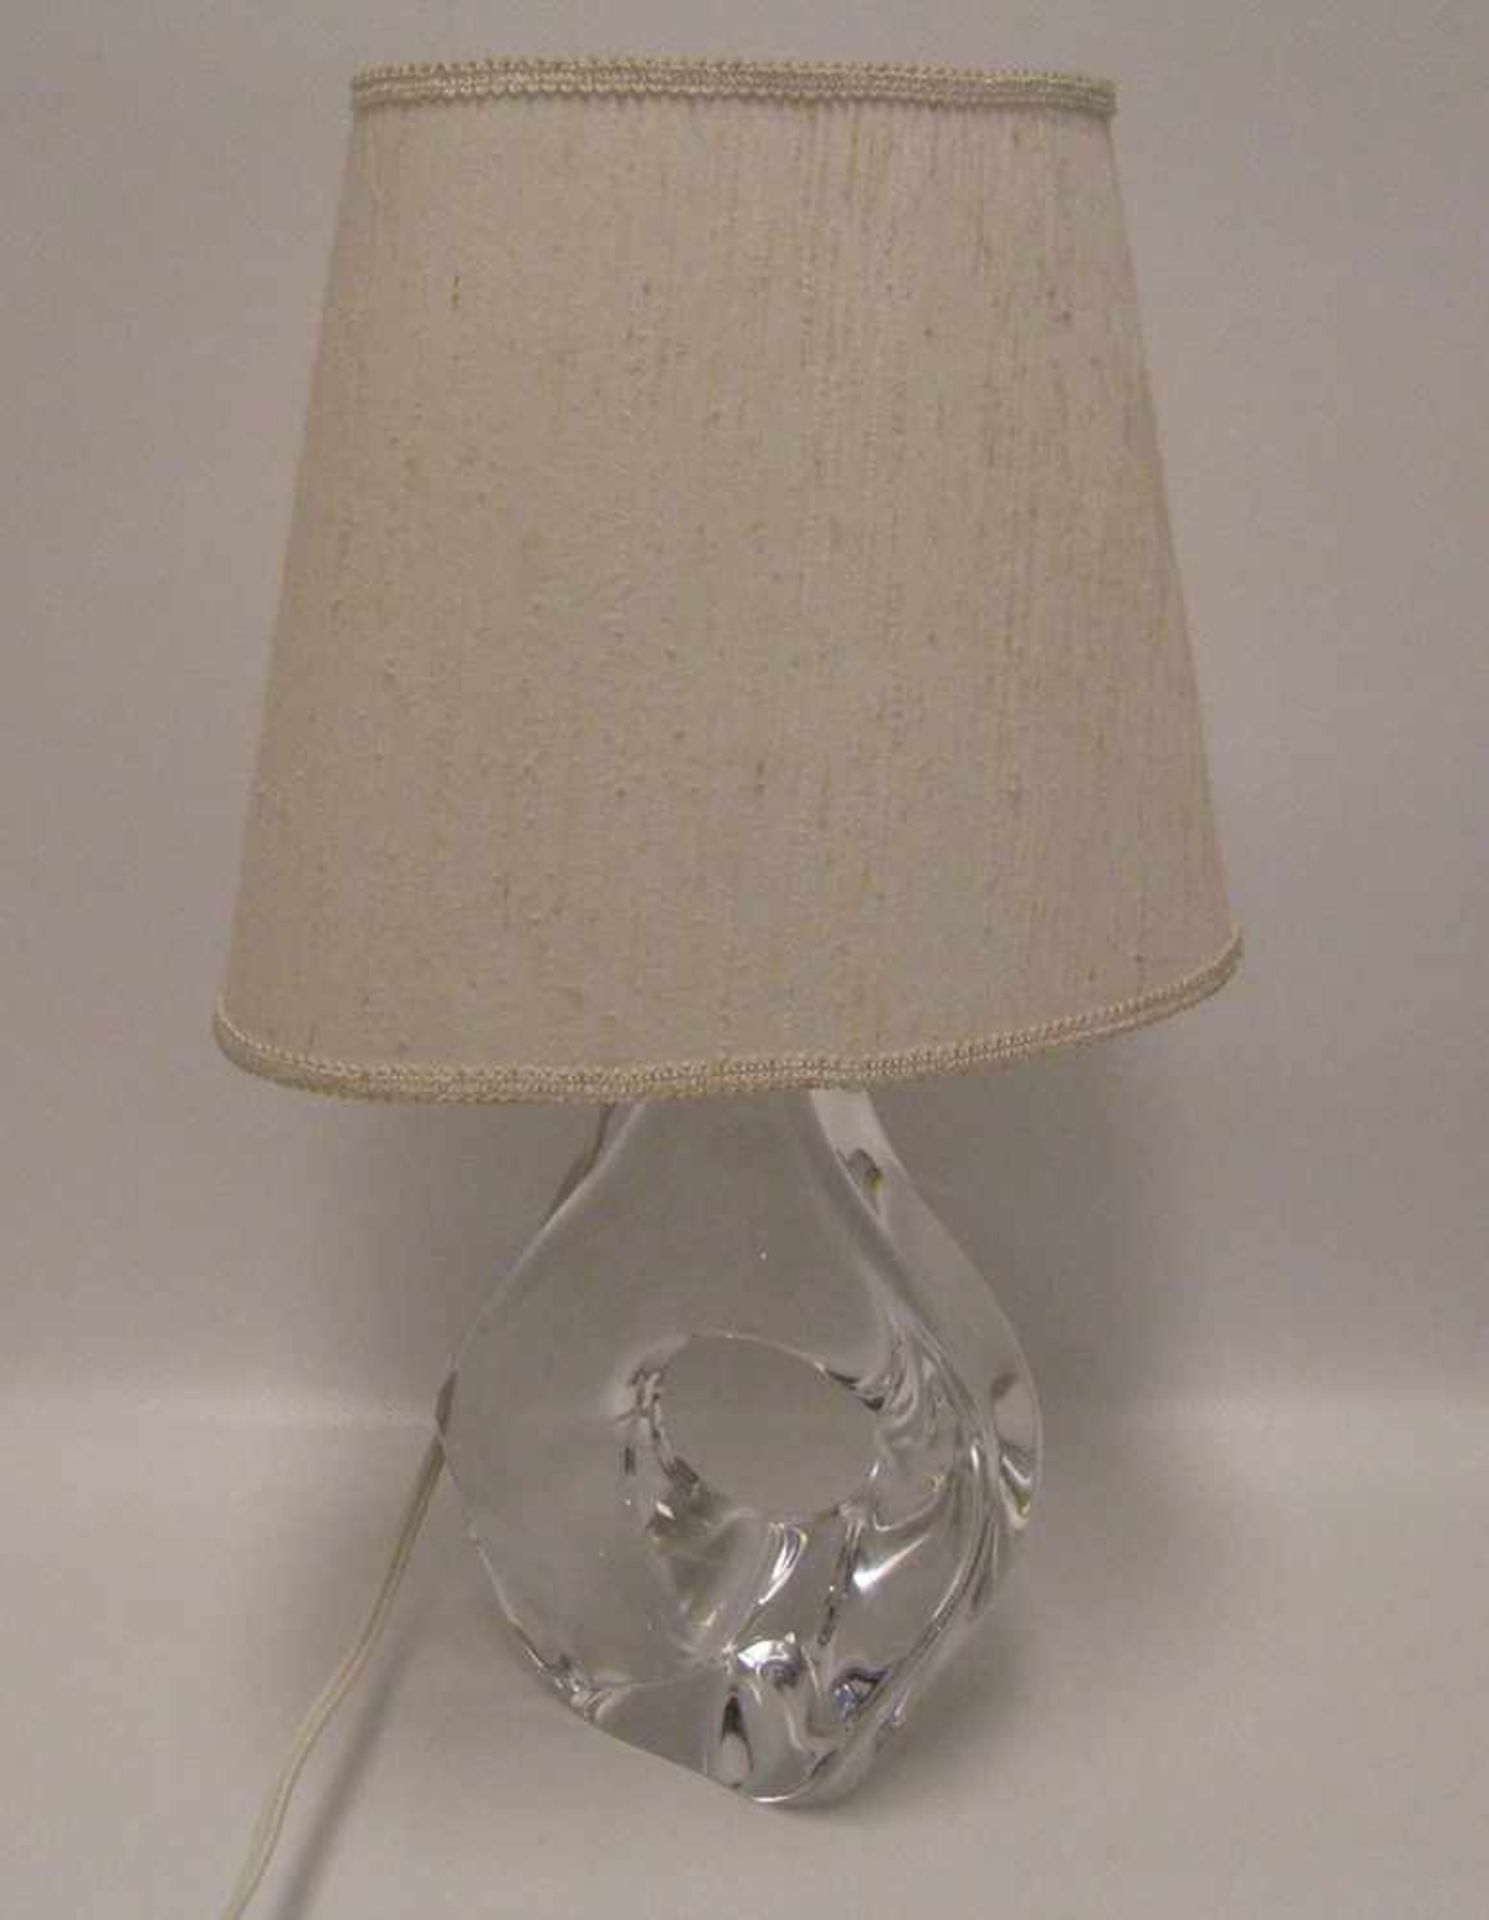 Tischlampe, 1960er Jahre, sign. "Daum France", farbloses Glas, h 21 cm, d 16,5 cm.- - -19.00 %